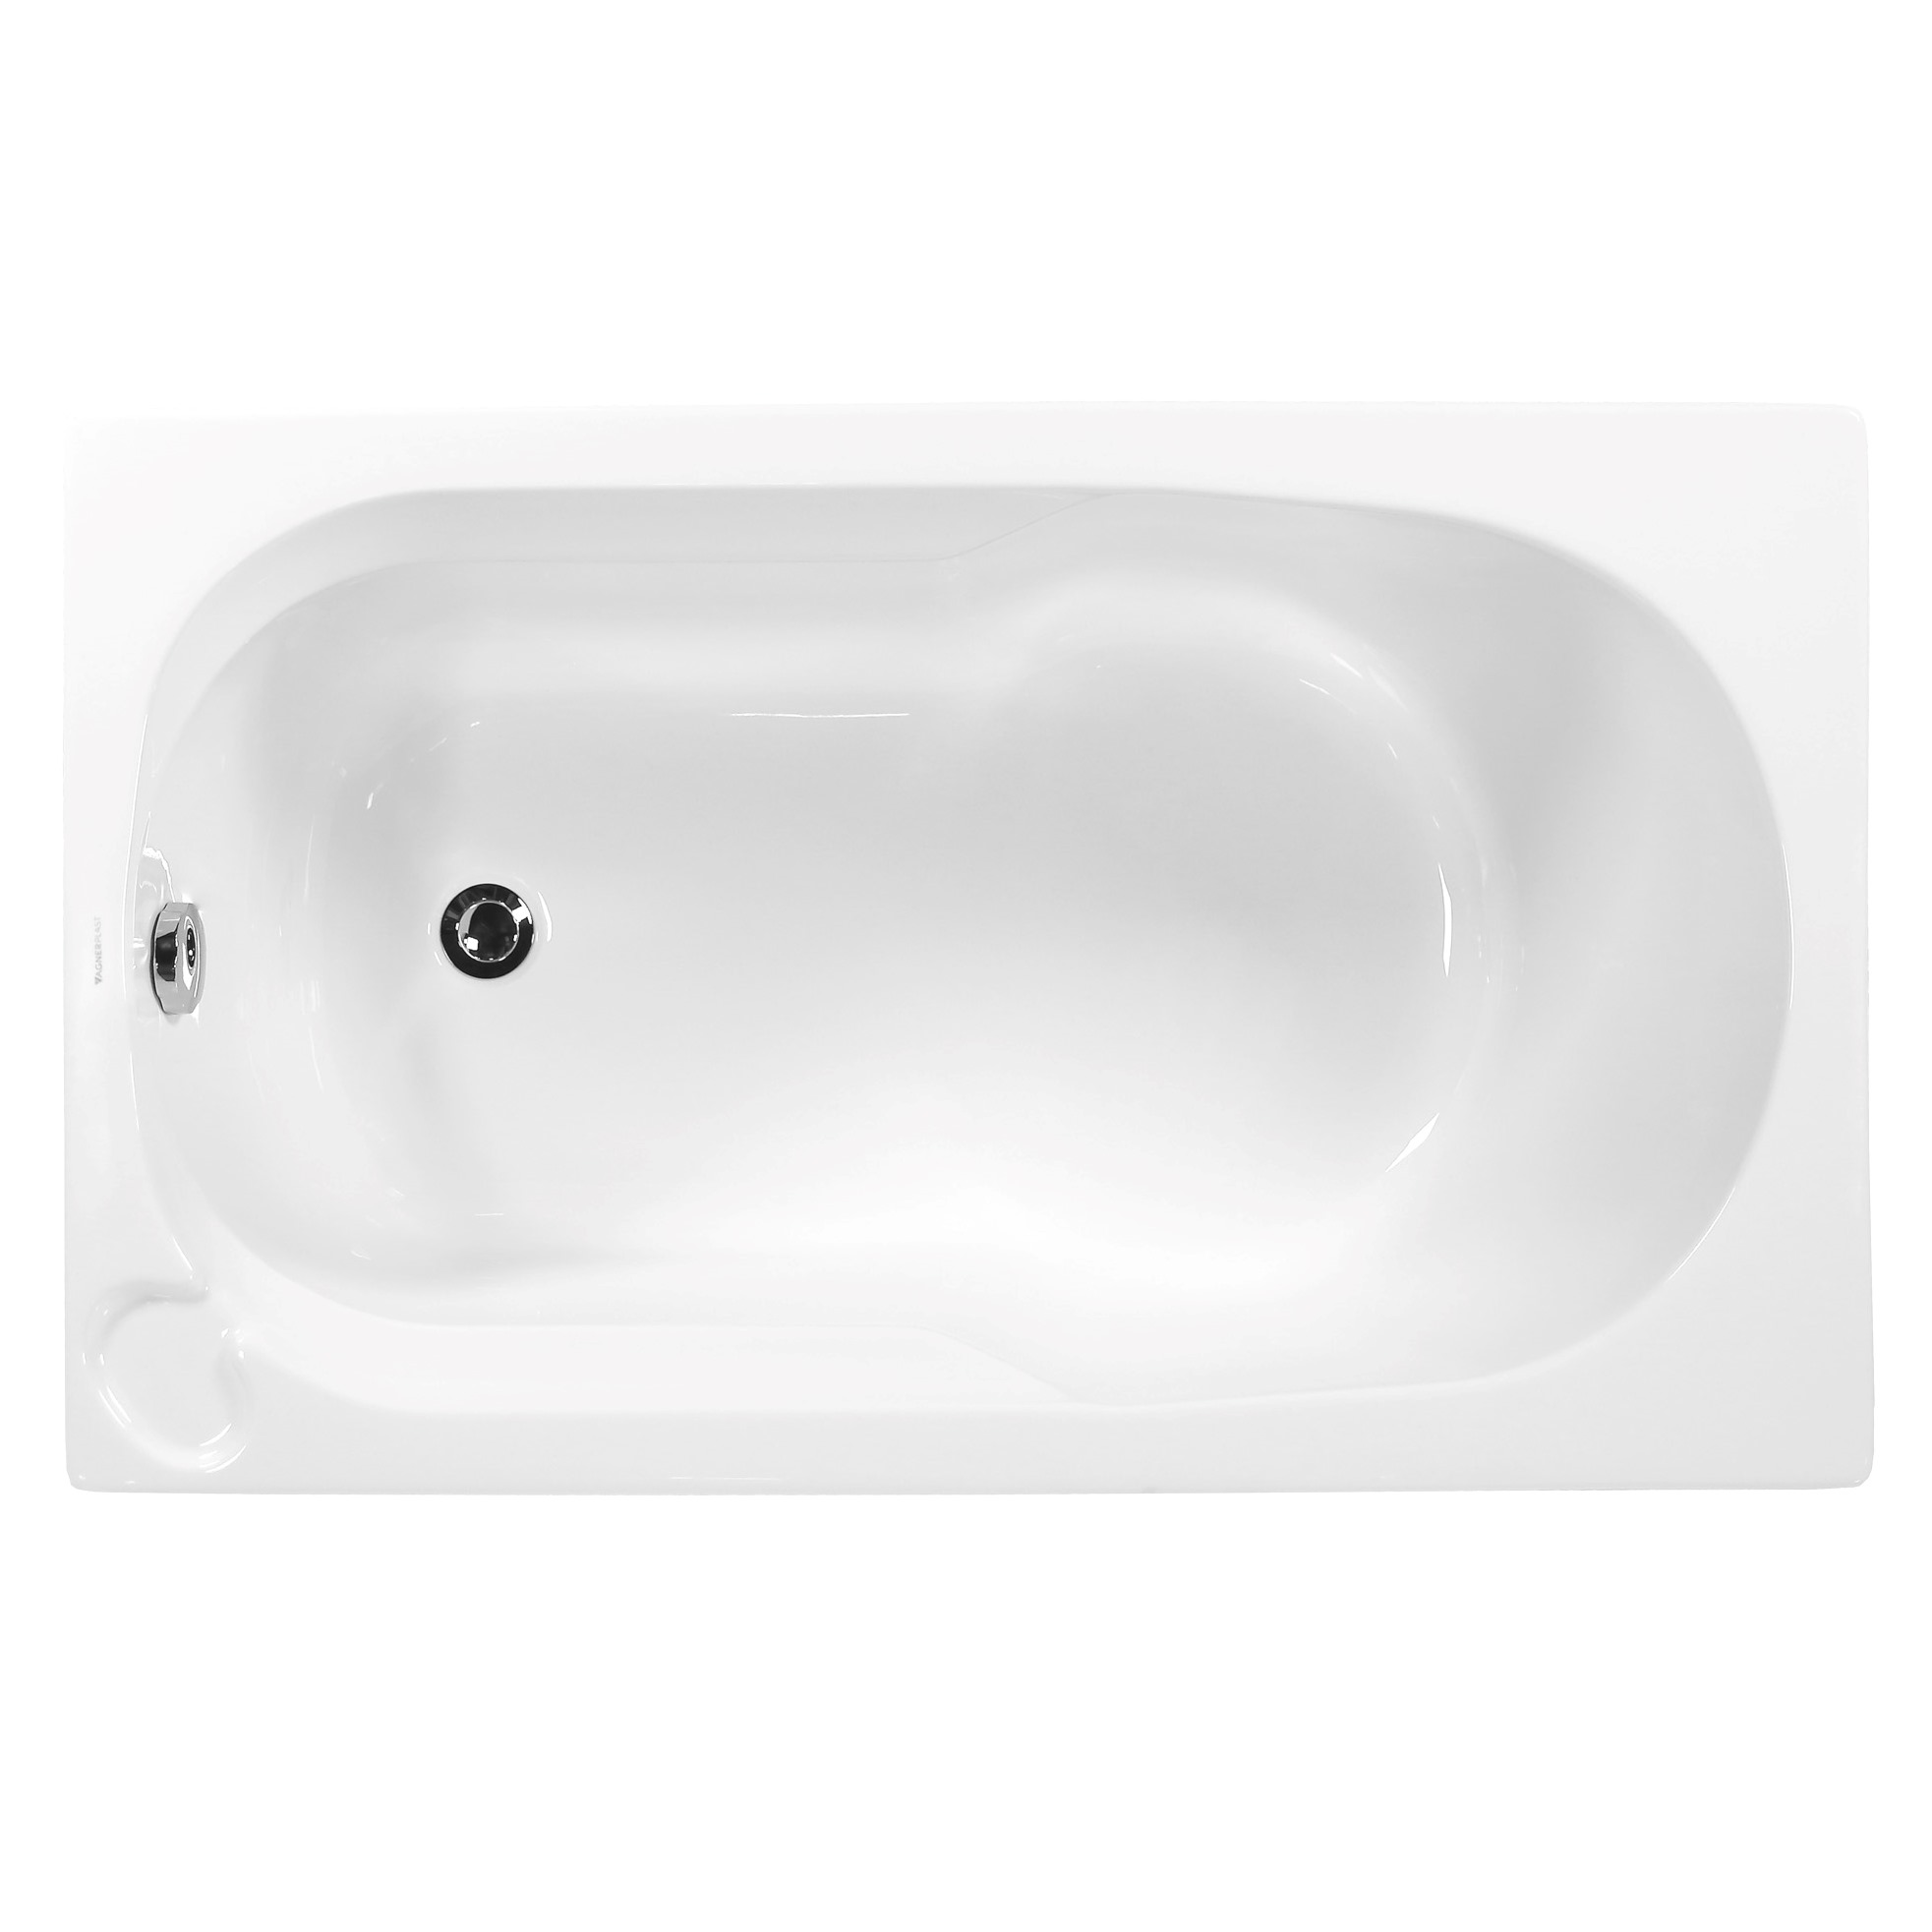 Чугунная ванна castalia 120х70 н0000006 с антискользящим покрытием